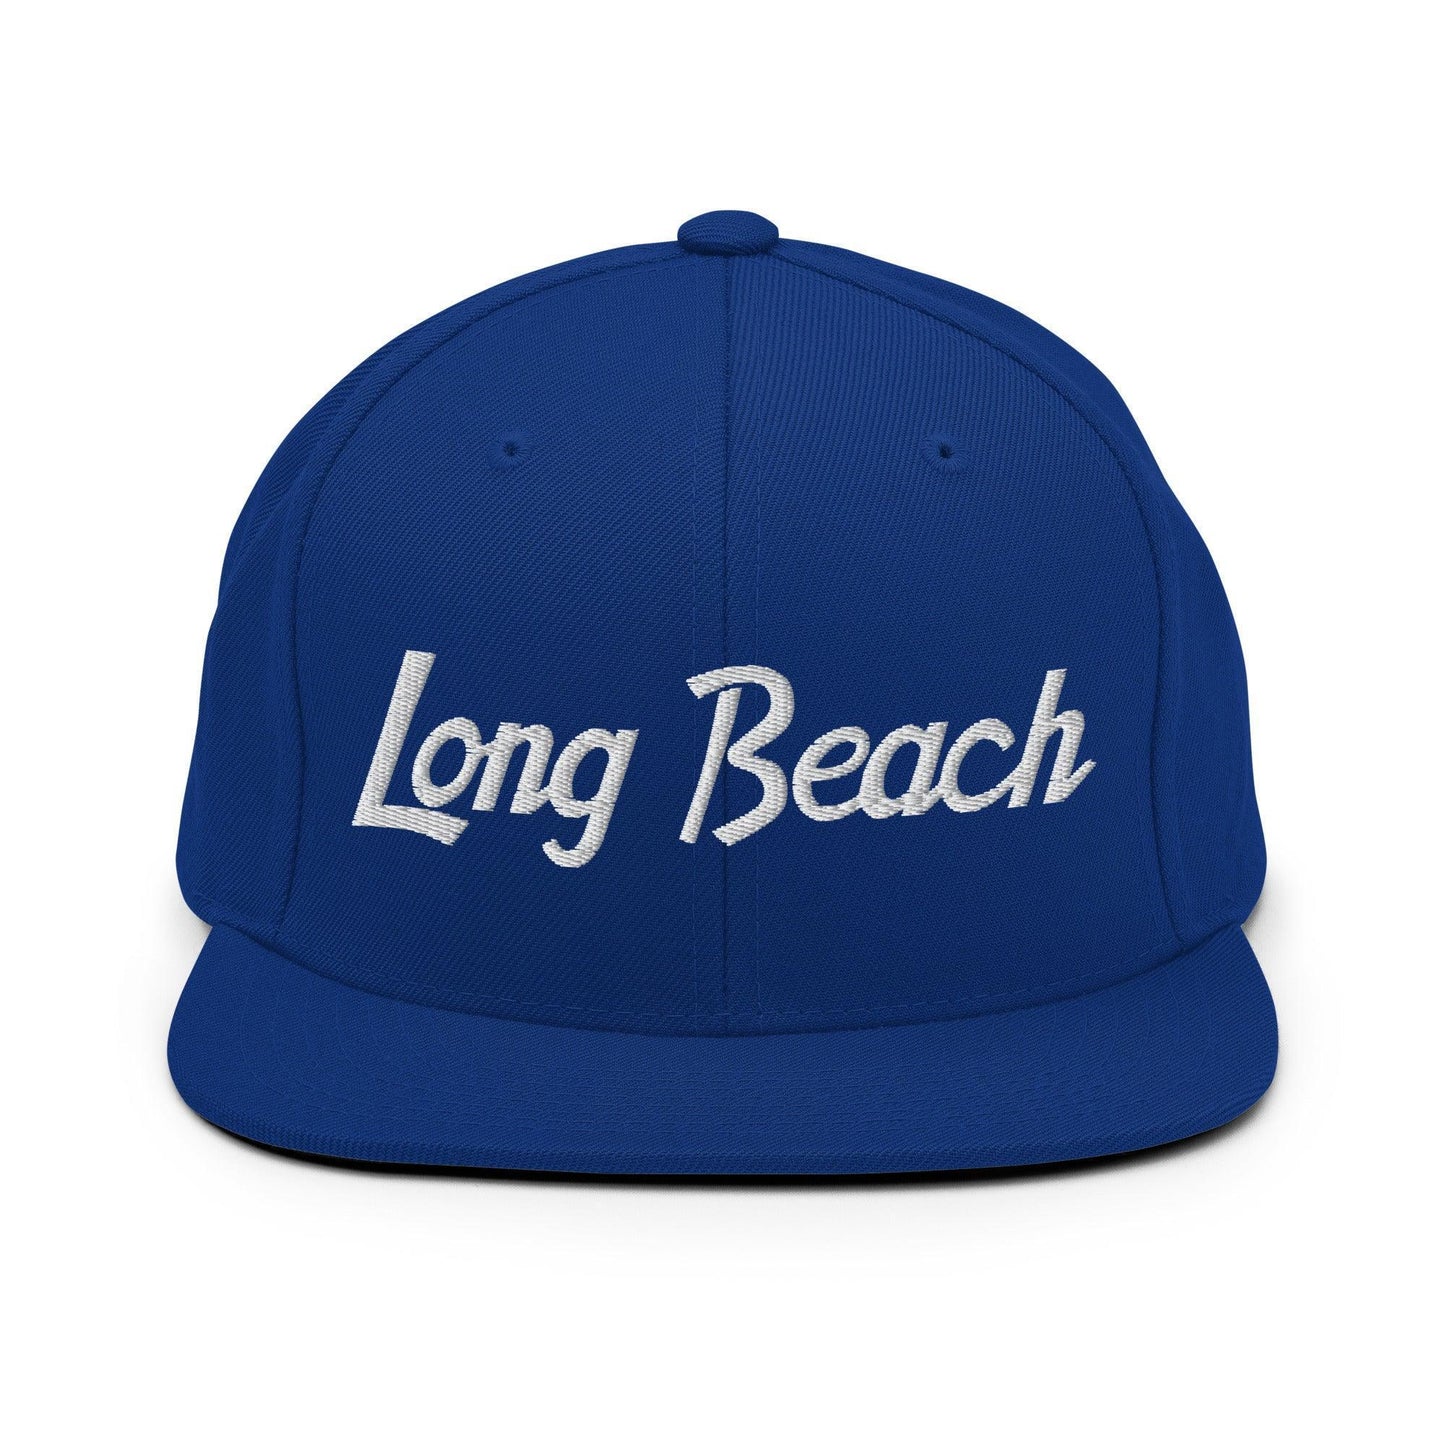 Long Beach Script Snapback Hat Royal Blue